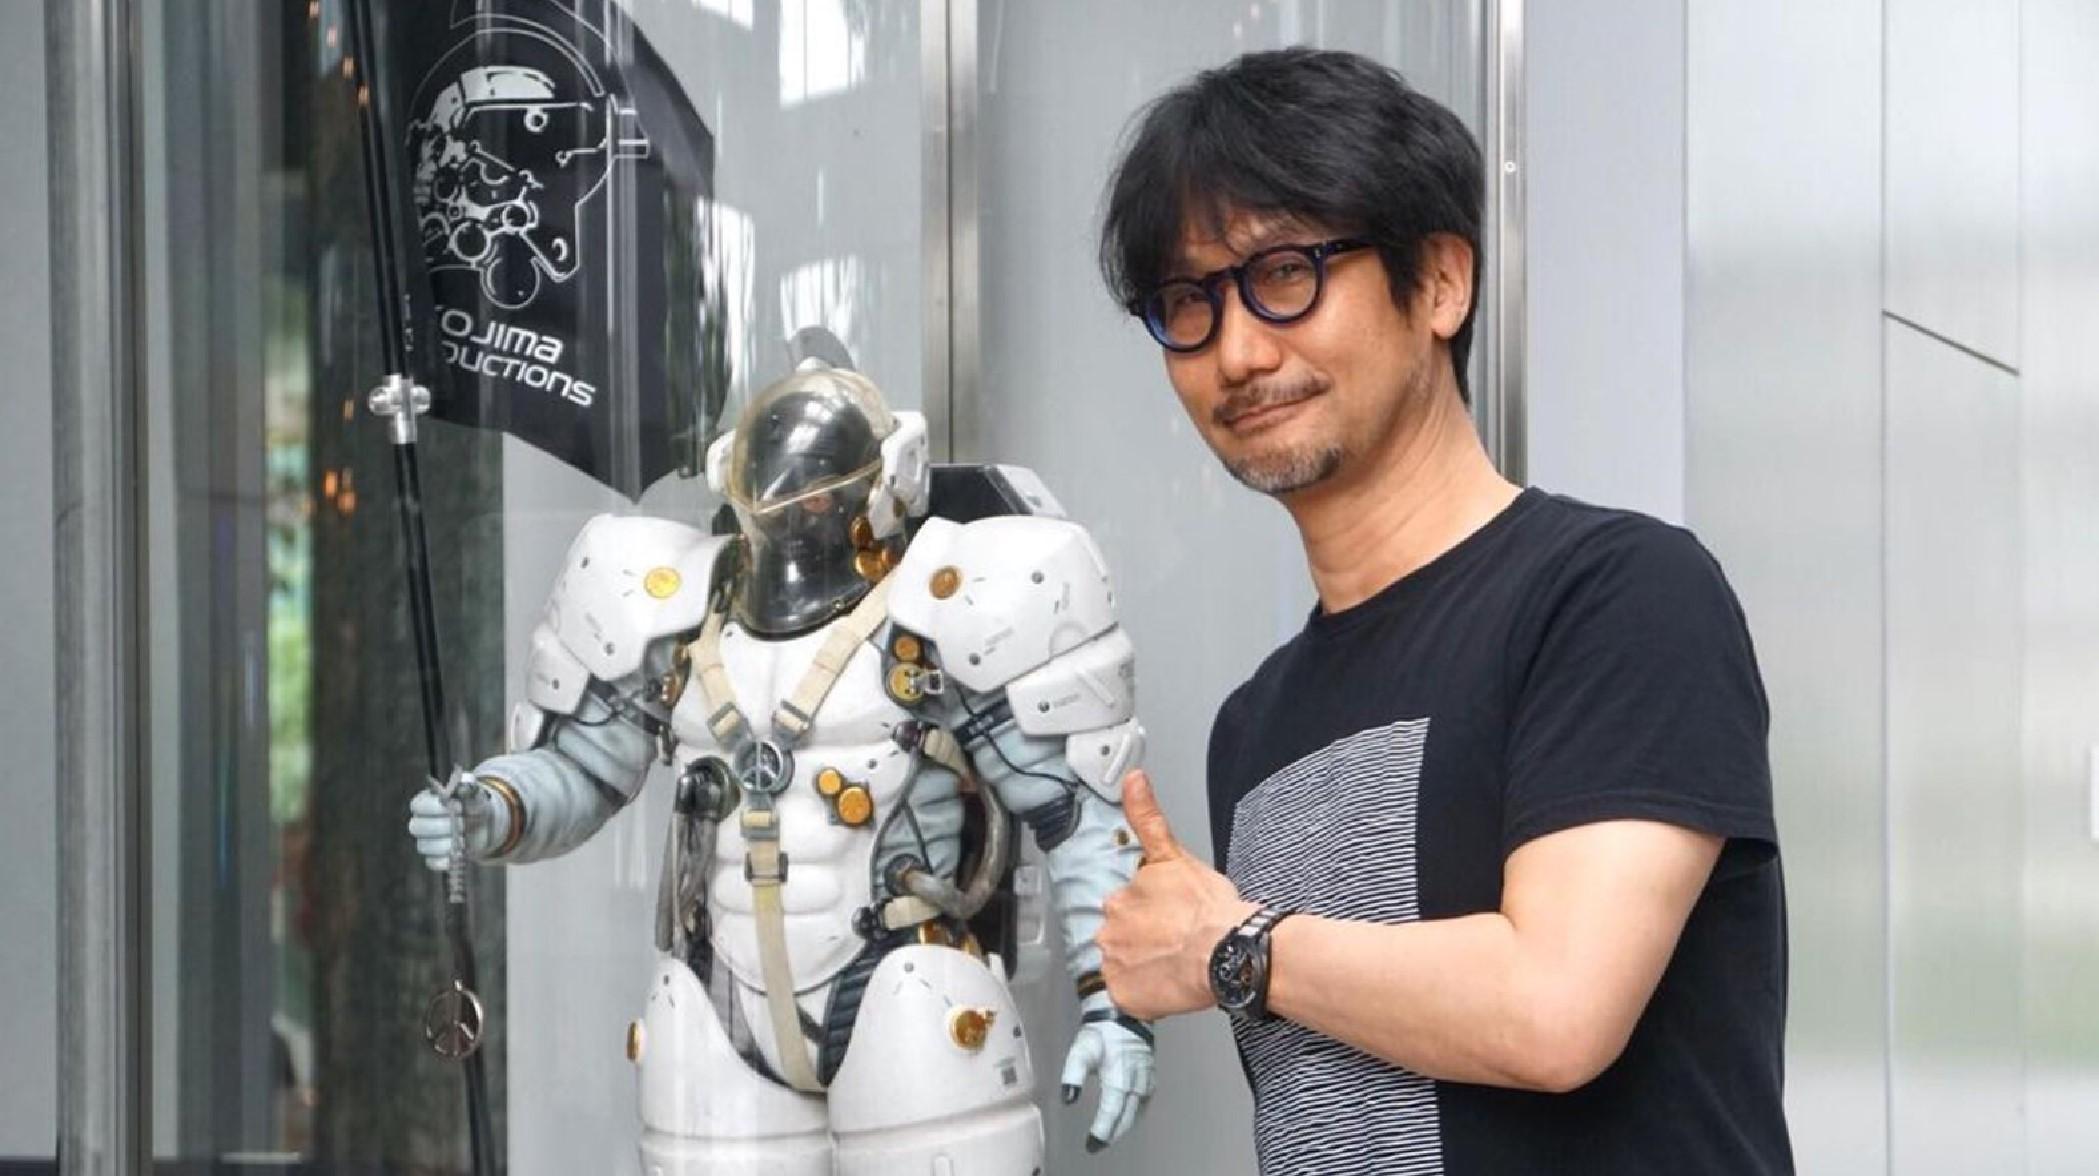 Is Hideo Kojima directing the Death Stranding movie? - Dexerto